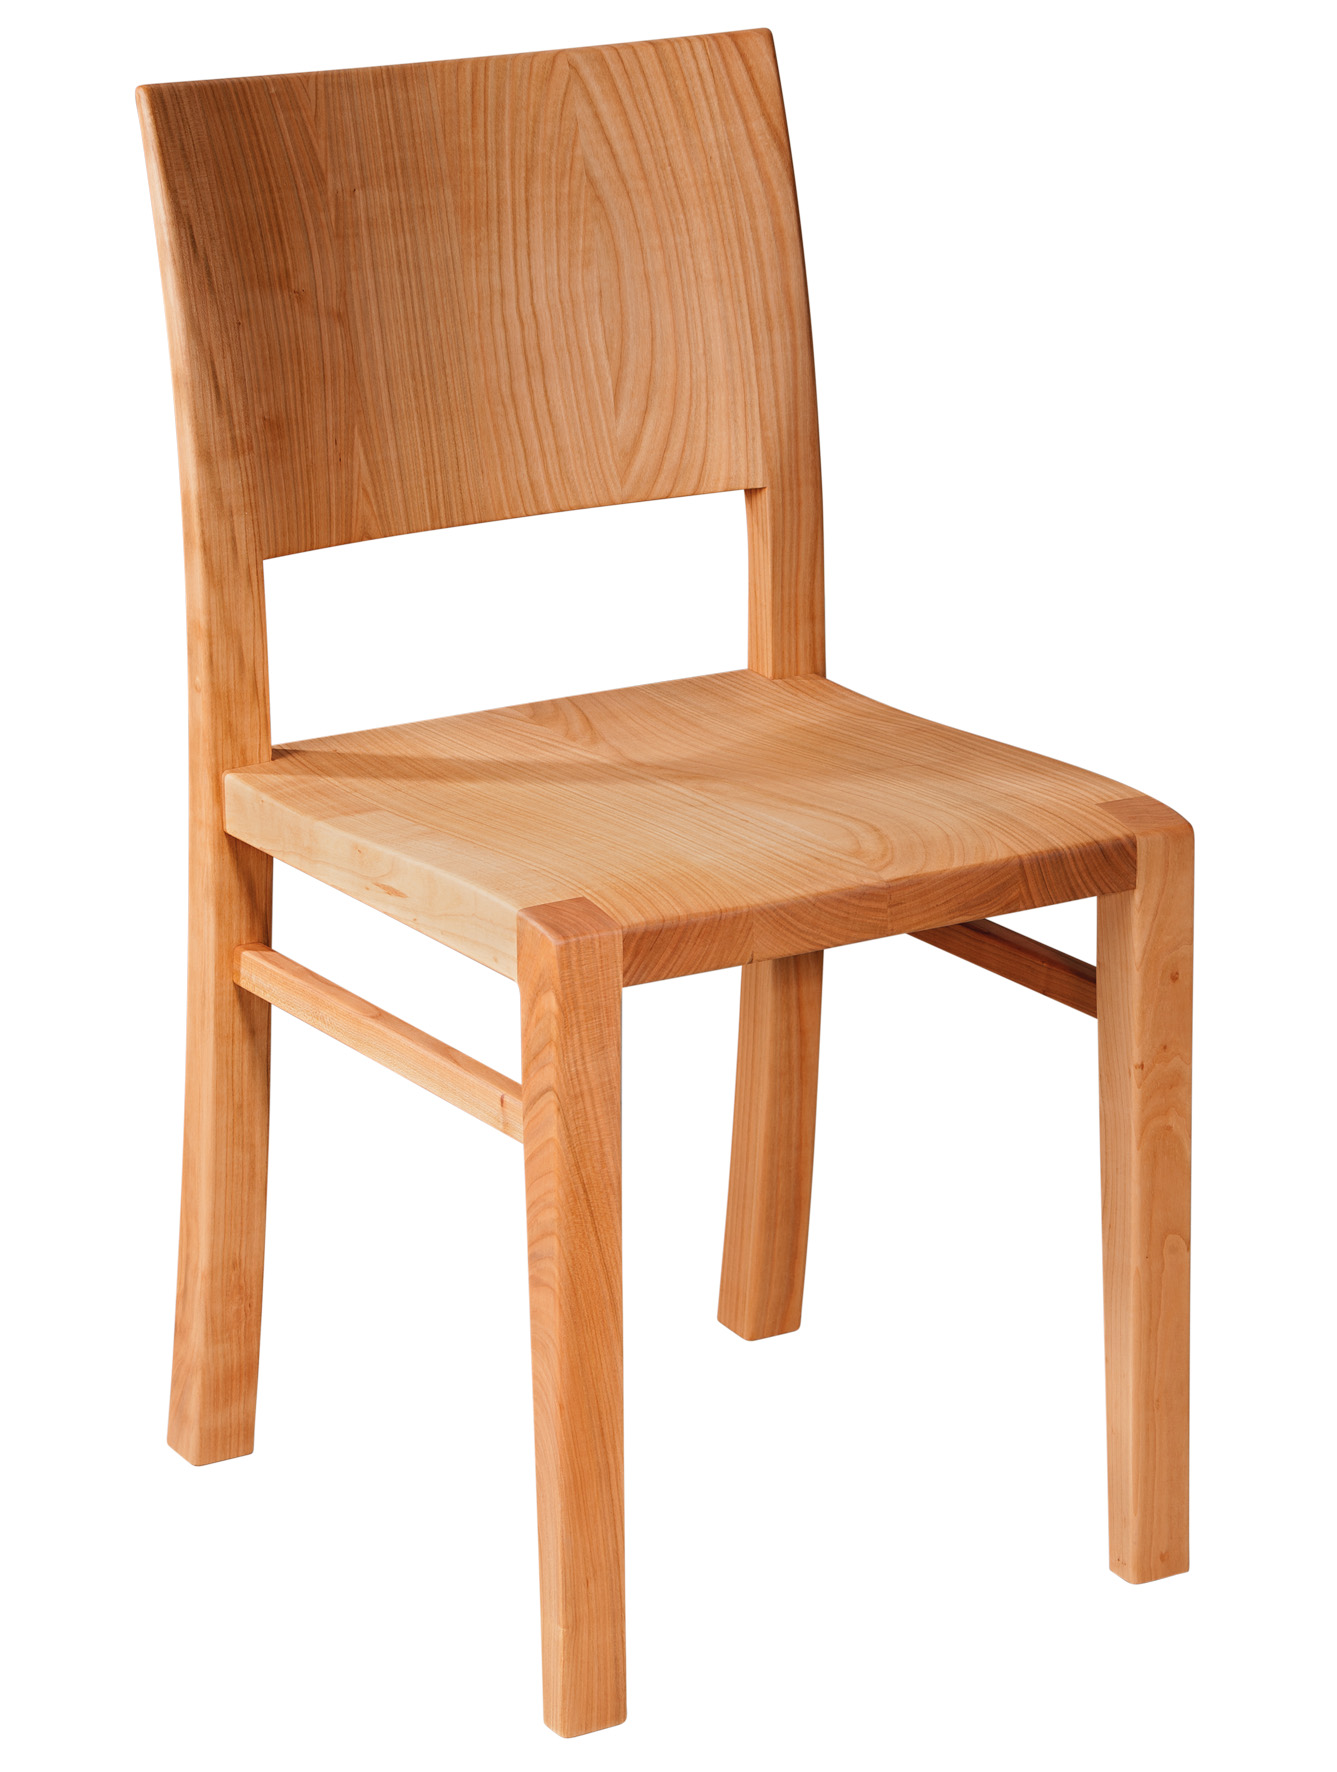 CARESSE WÜRFEL Stuhl mit körpergerecht ausgeformtem Holzsitz